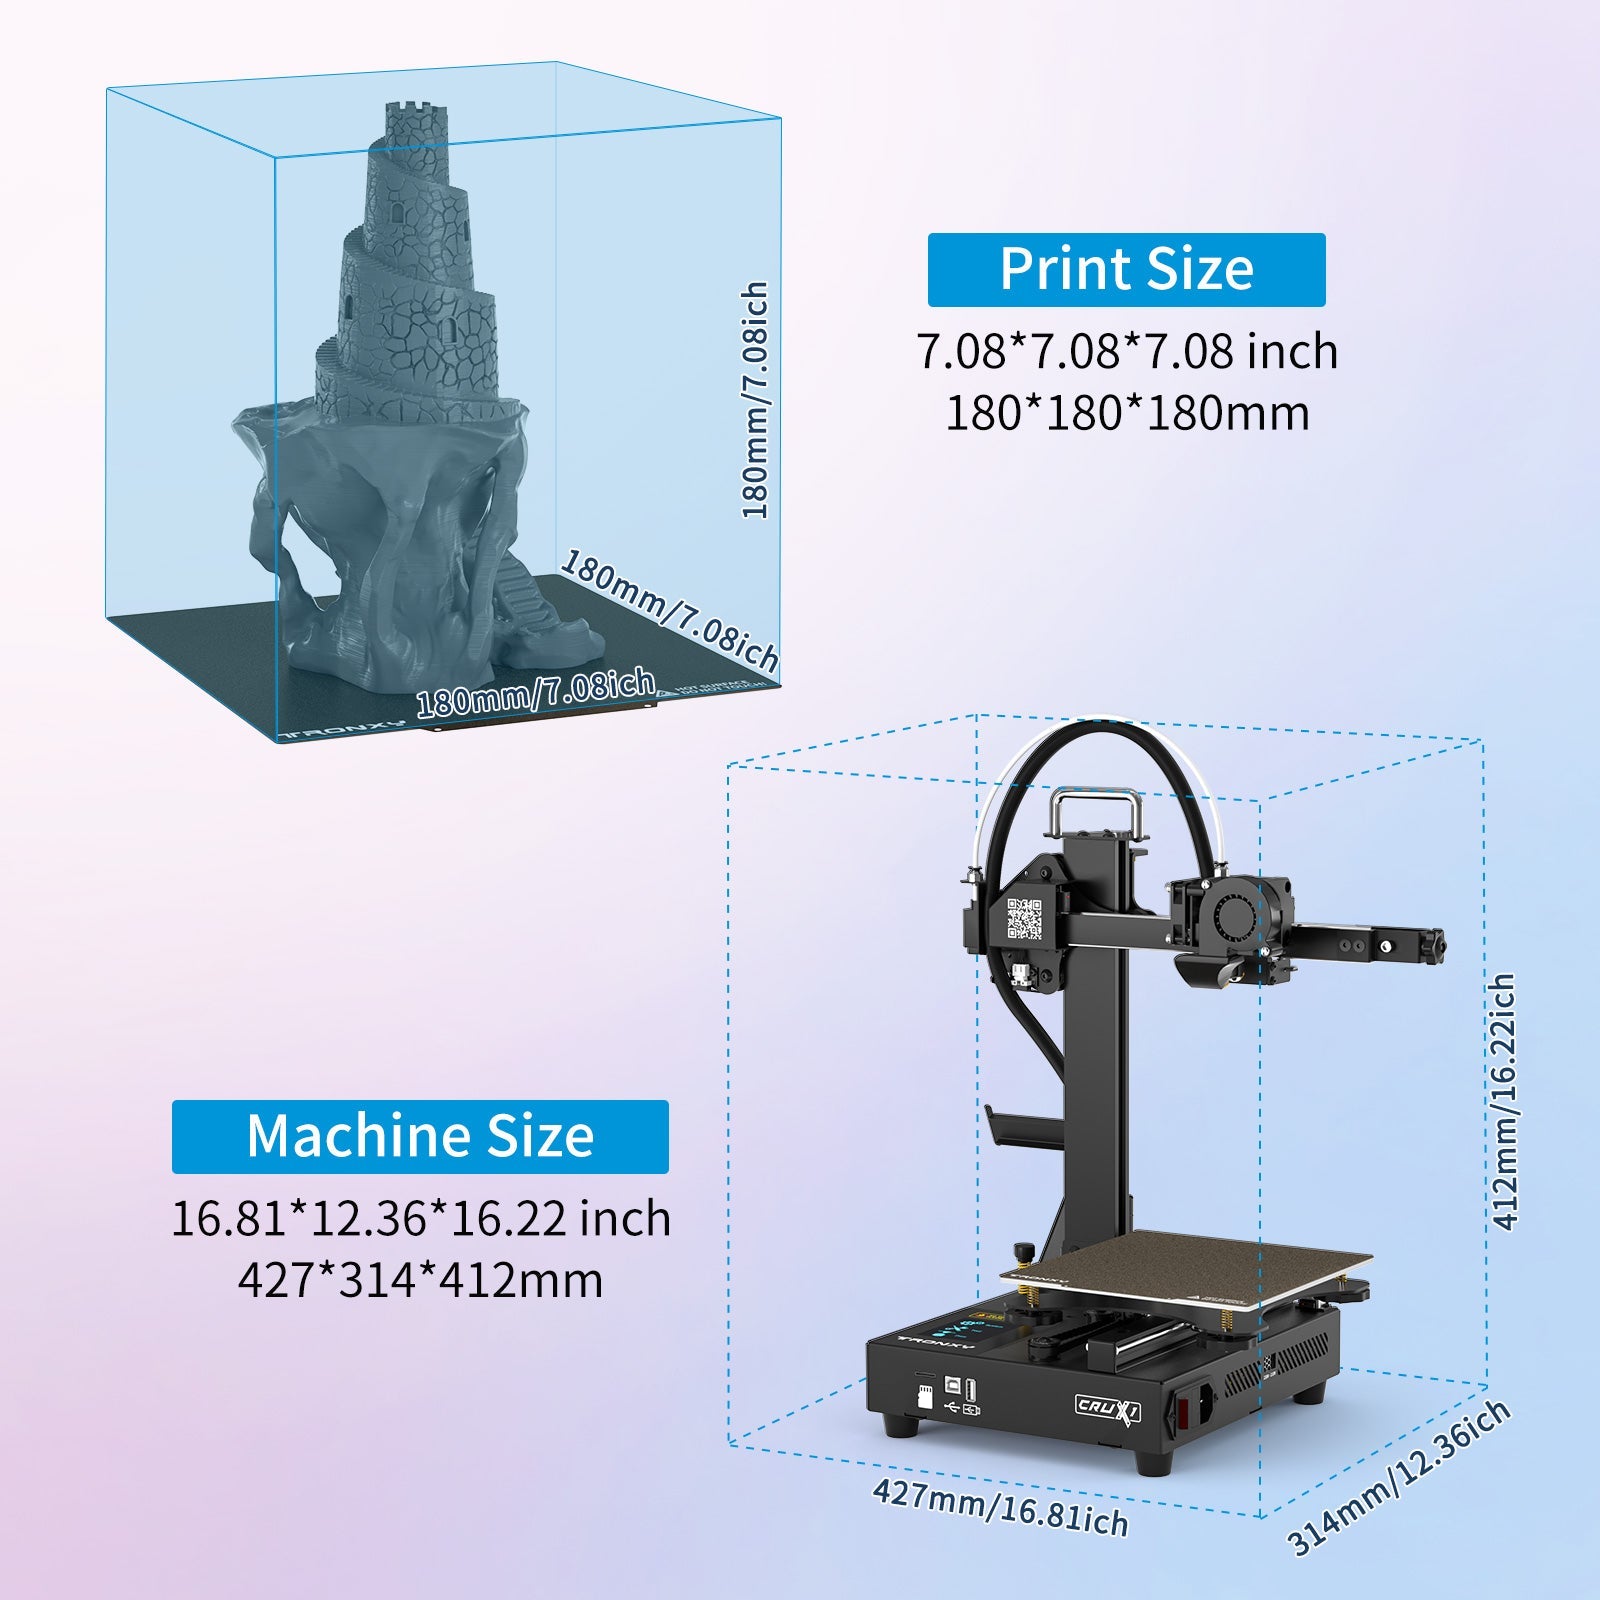 Carbon fiber digital 3d printing machine Crux 1 ODM/OEM 180*180*180mm imprimante desktop impresora 3d printer | Electrr Inc